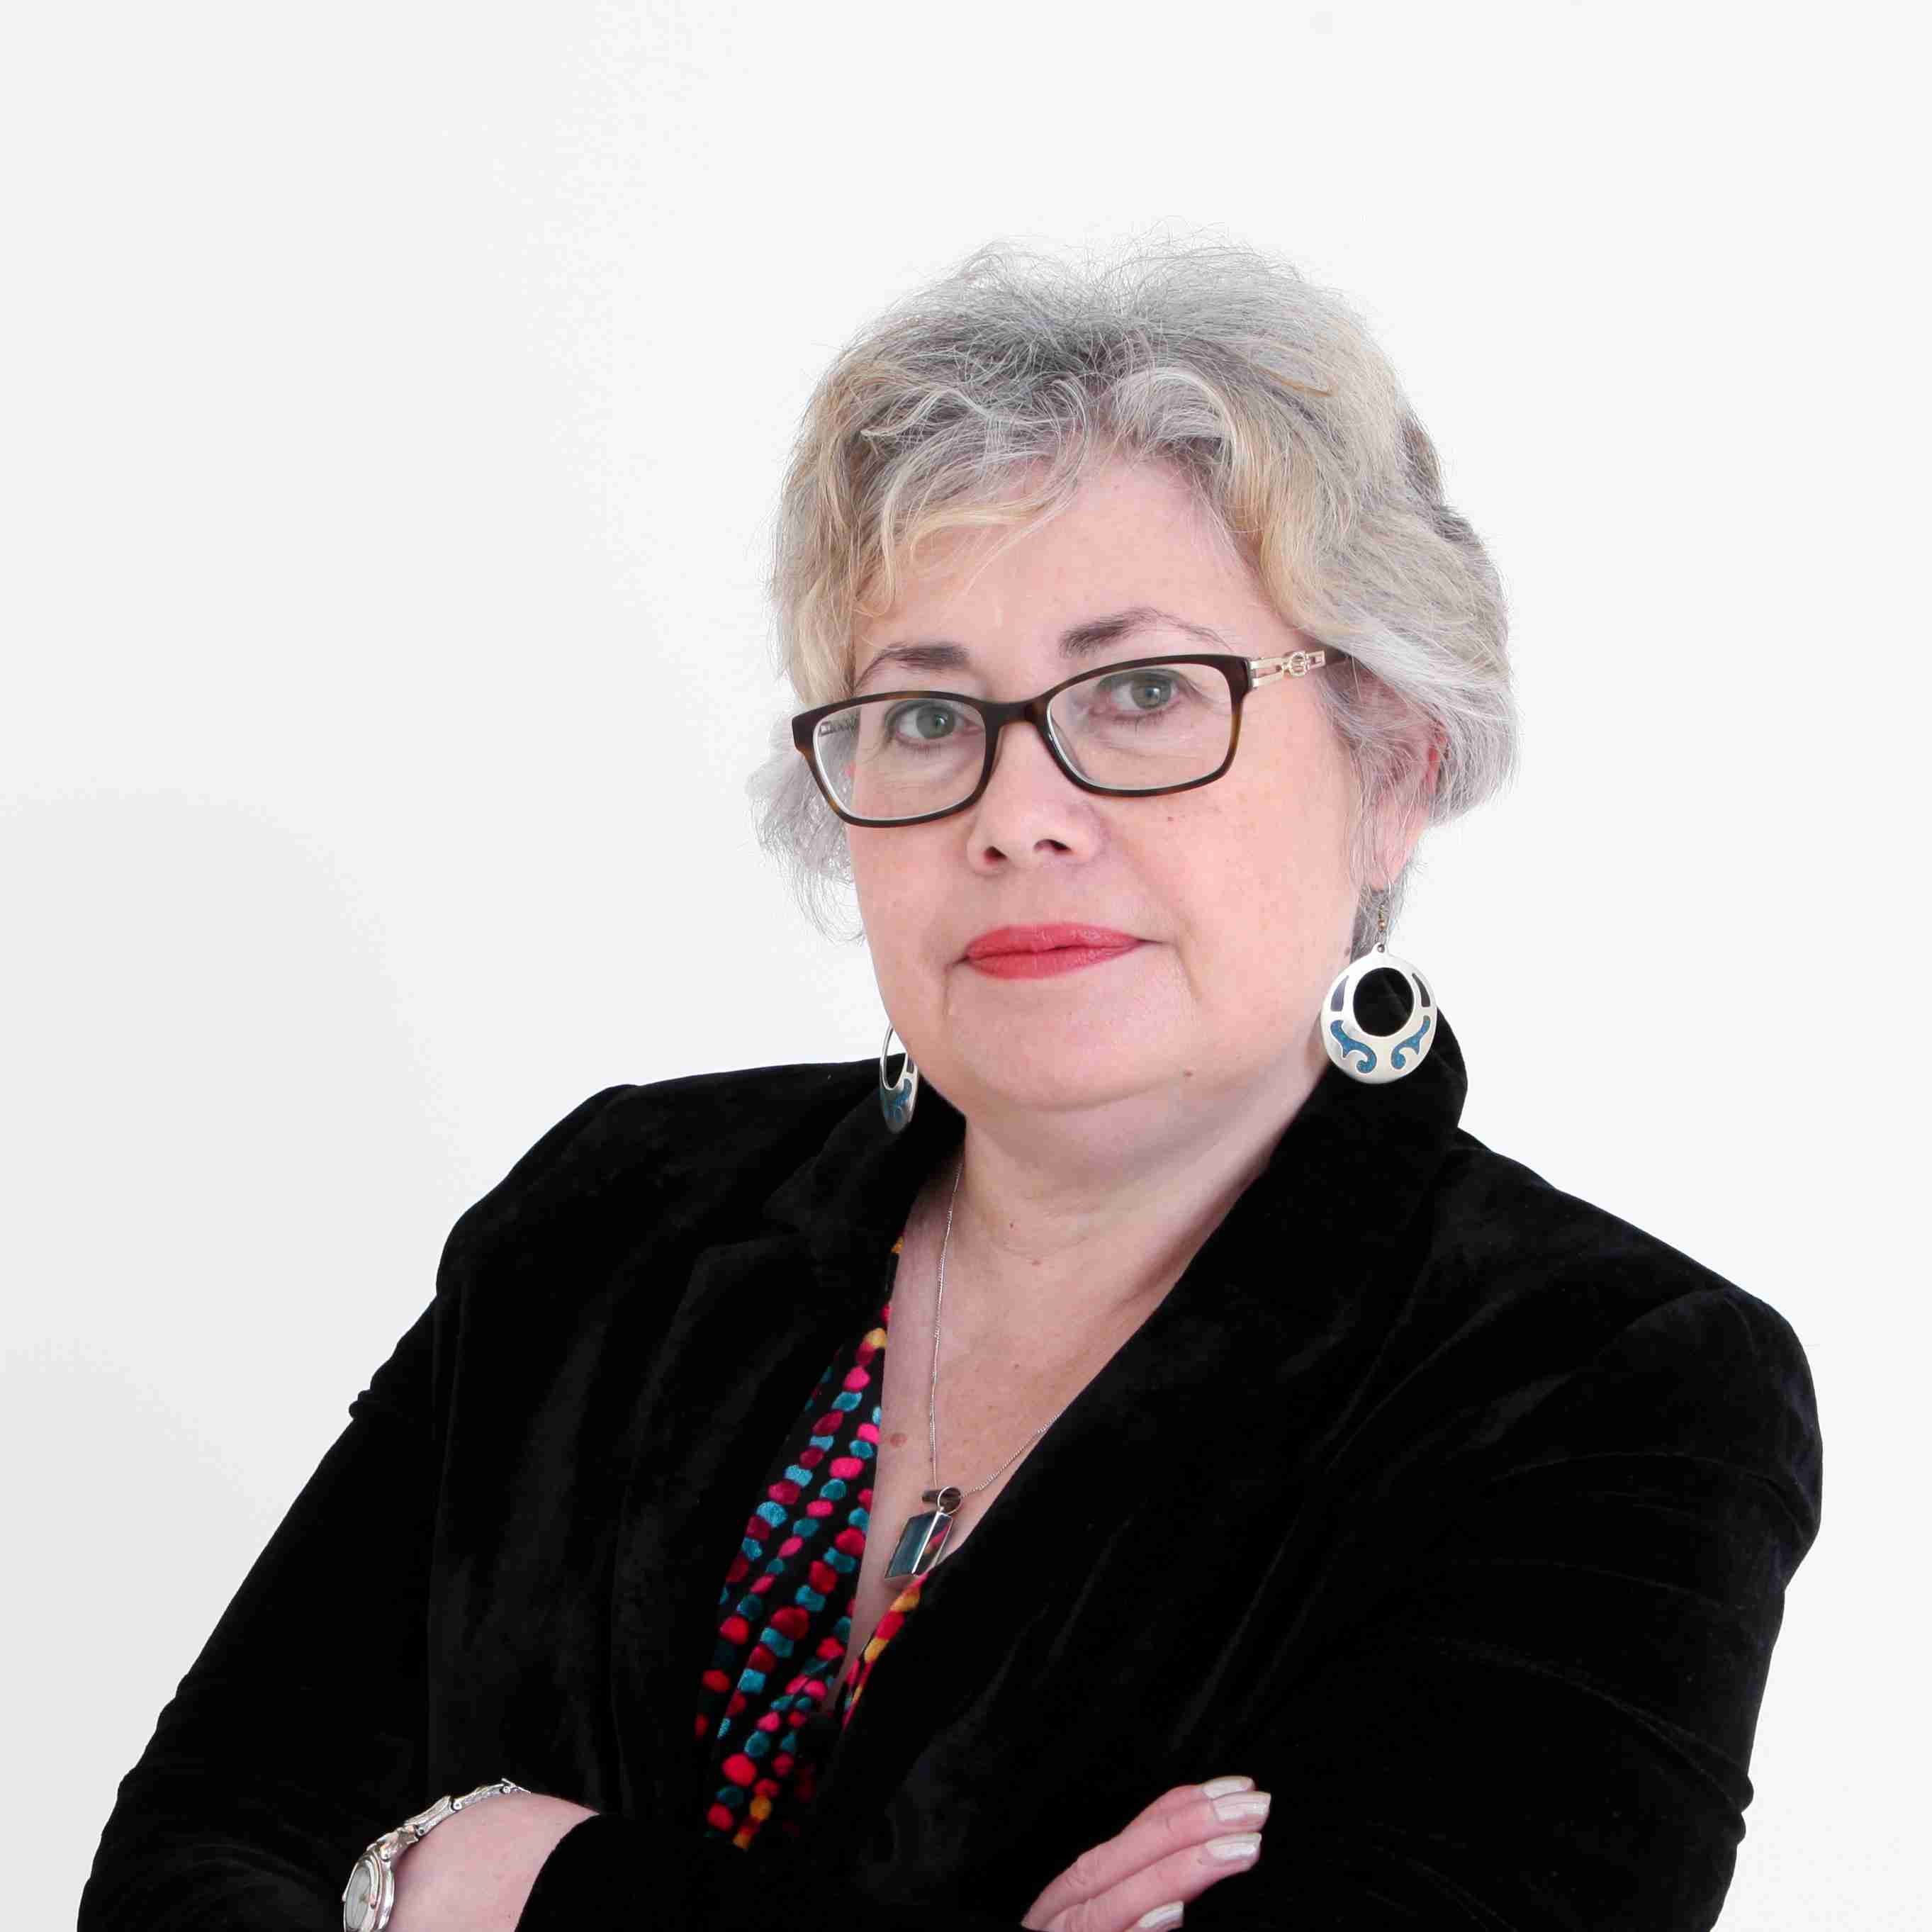 Profile image of Professor Sarah Pedersen